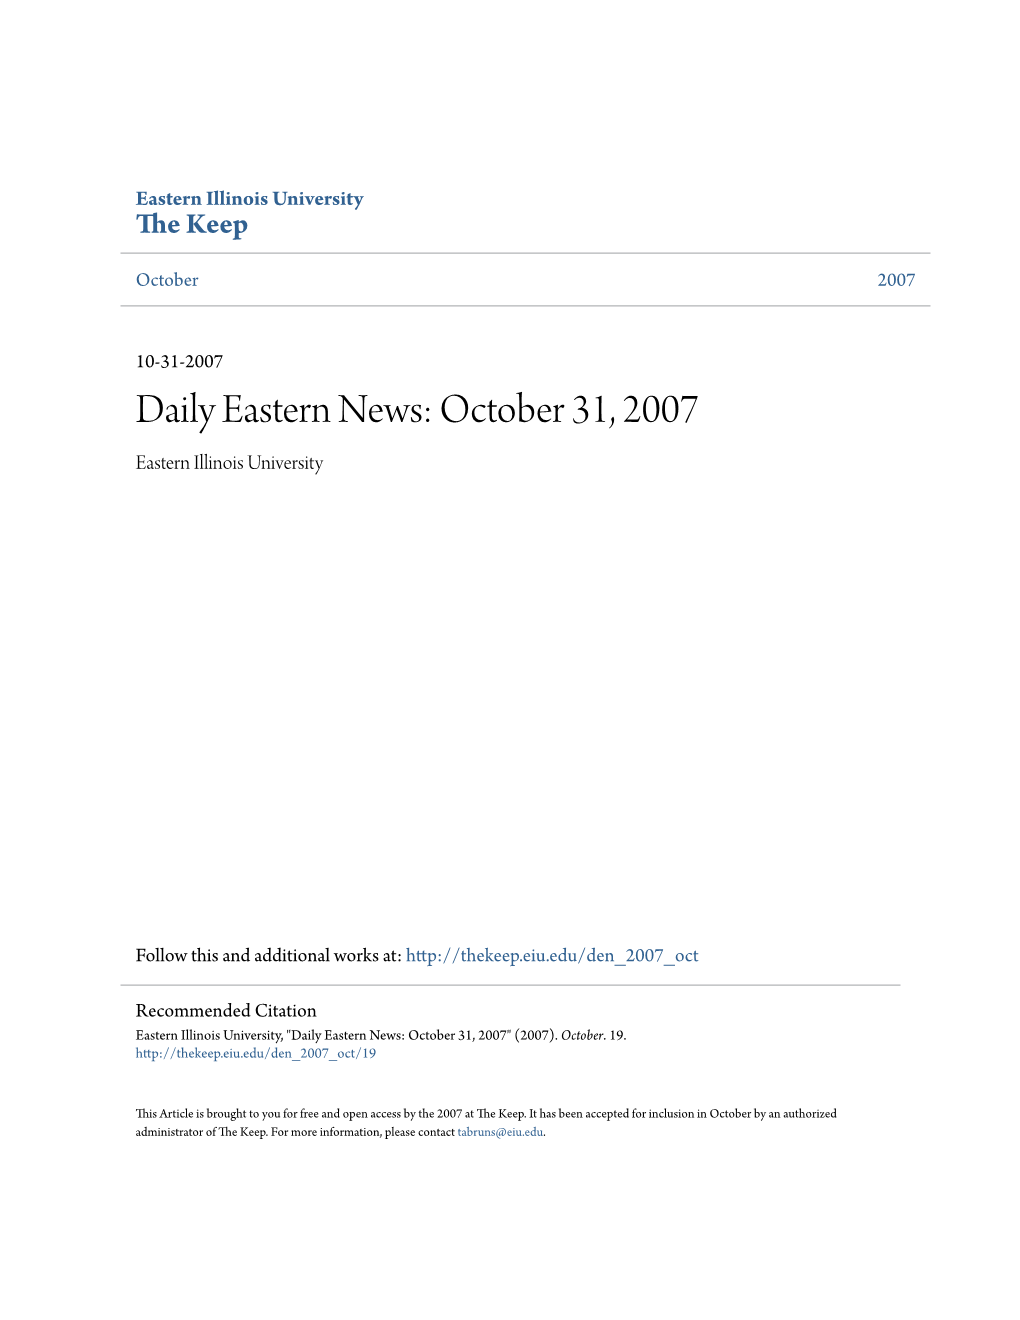 Daily Eastern News: October 31, 2007 Eastern Illinois University